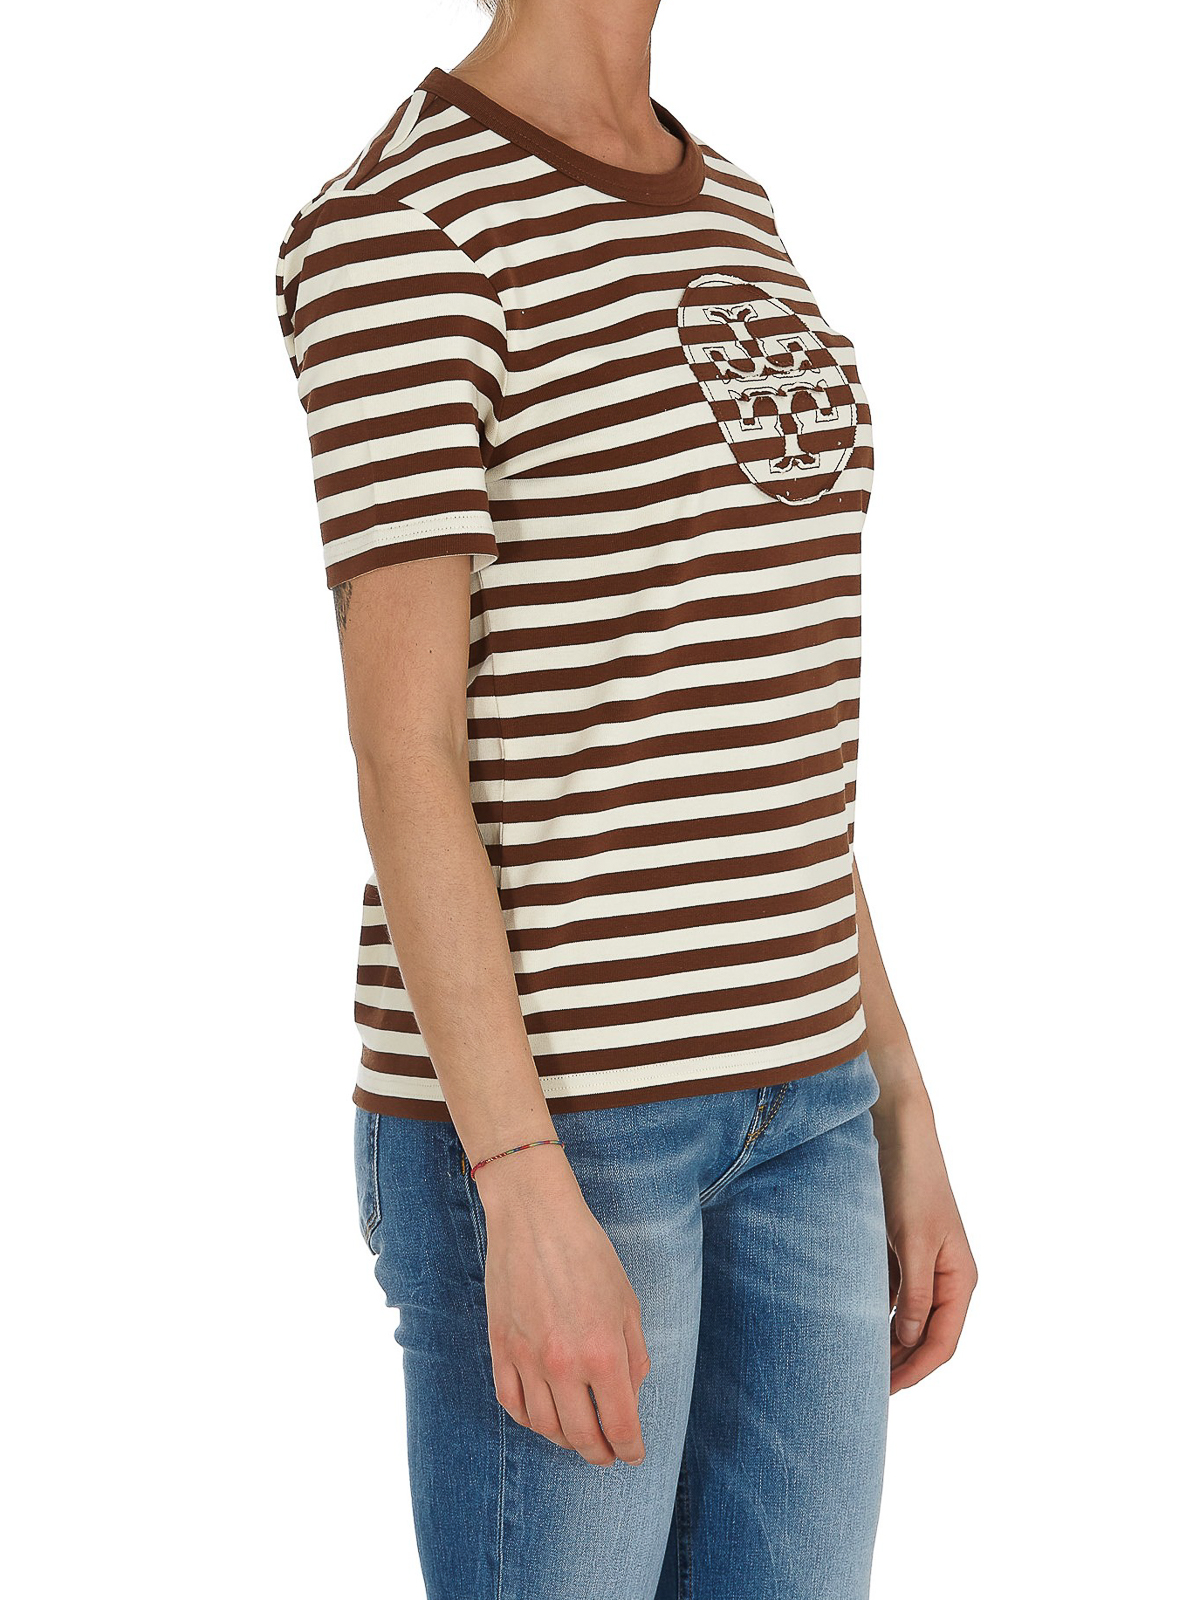 T-shirts Tory Burch - Striped T-shirt - 63871229 | Shop online at iKRIX